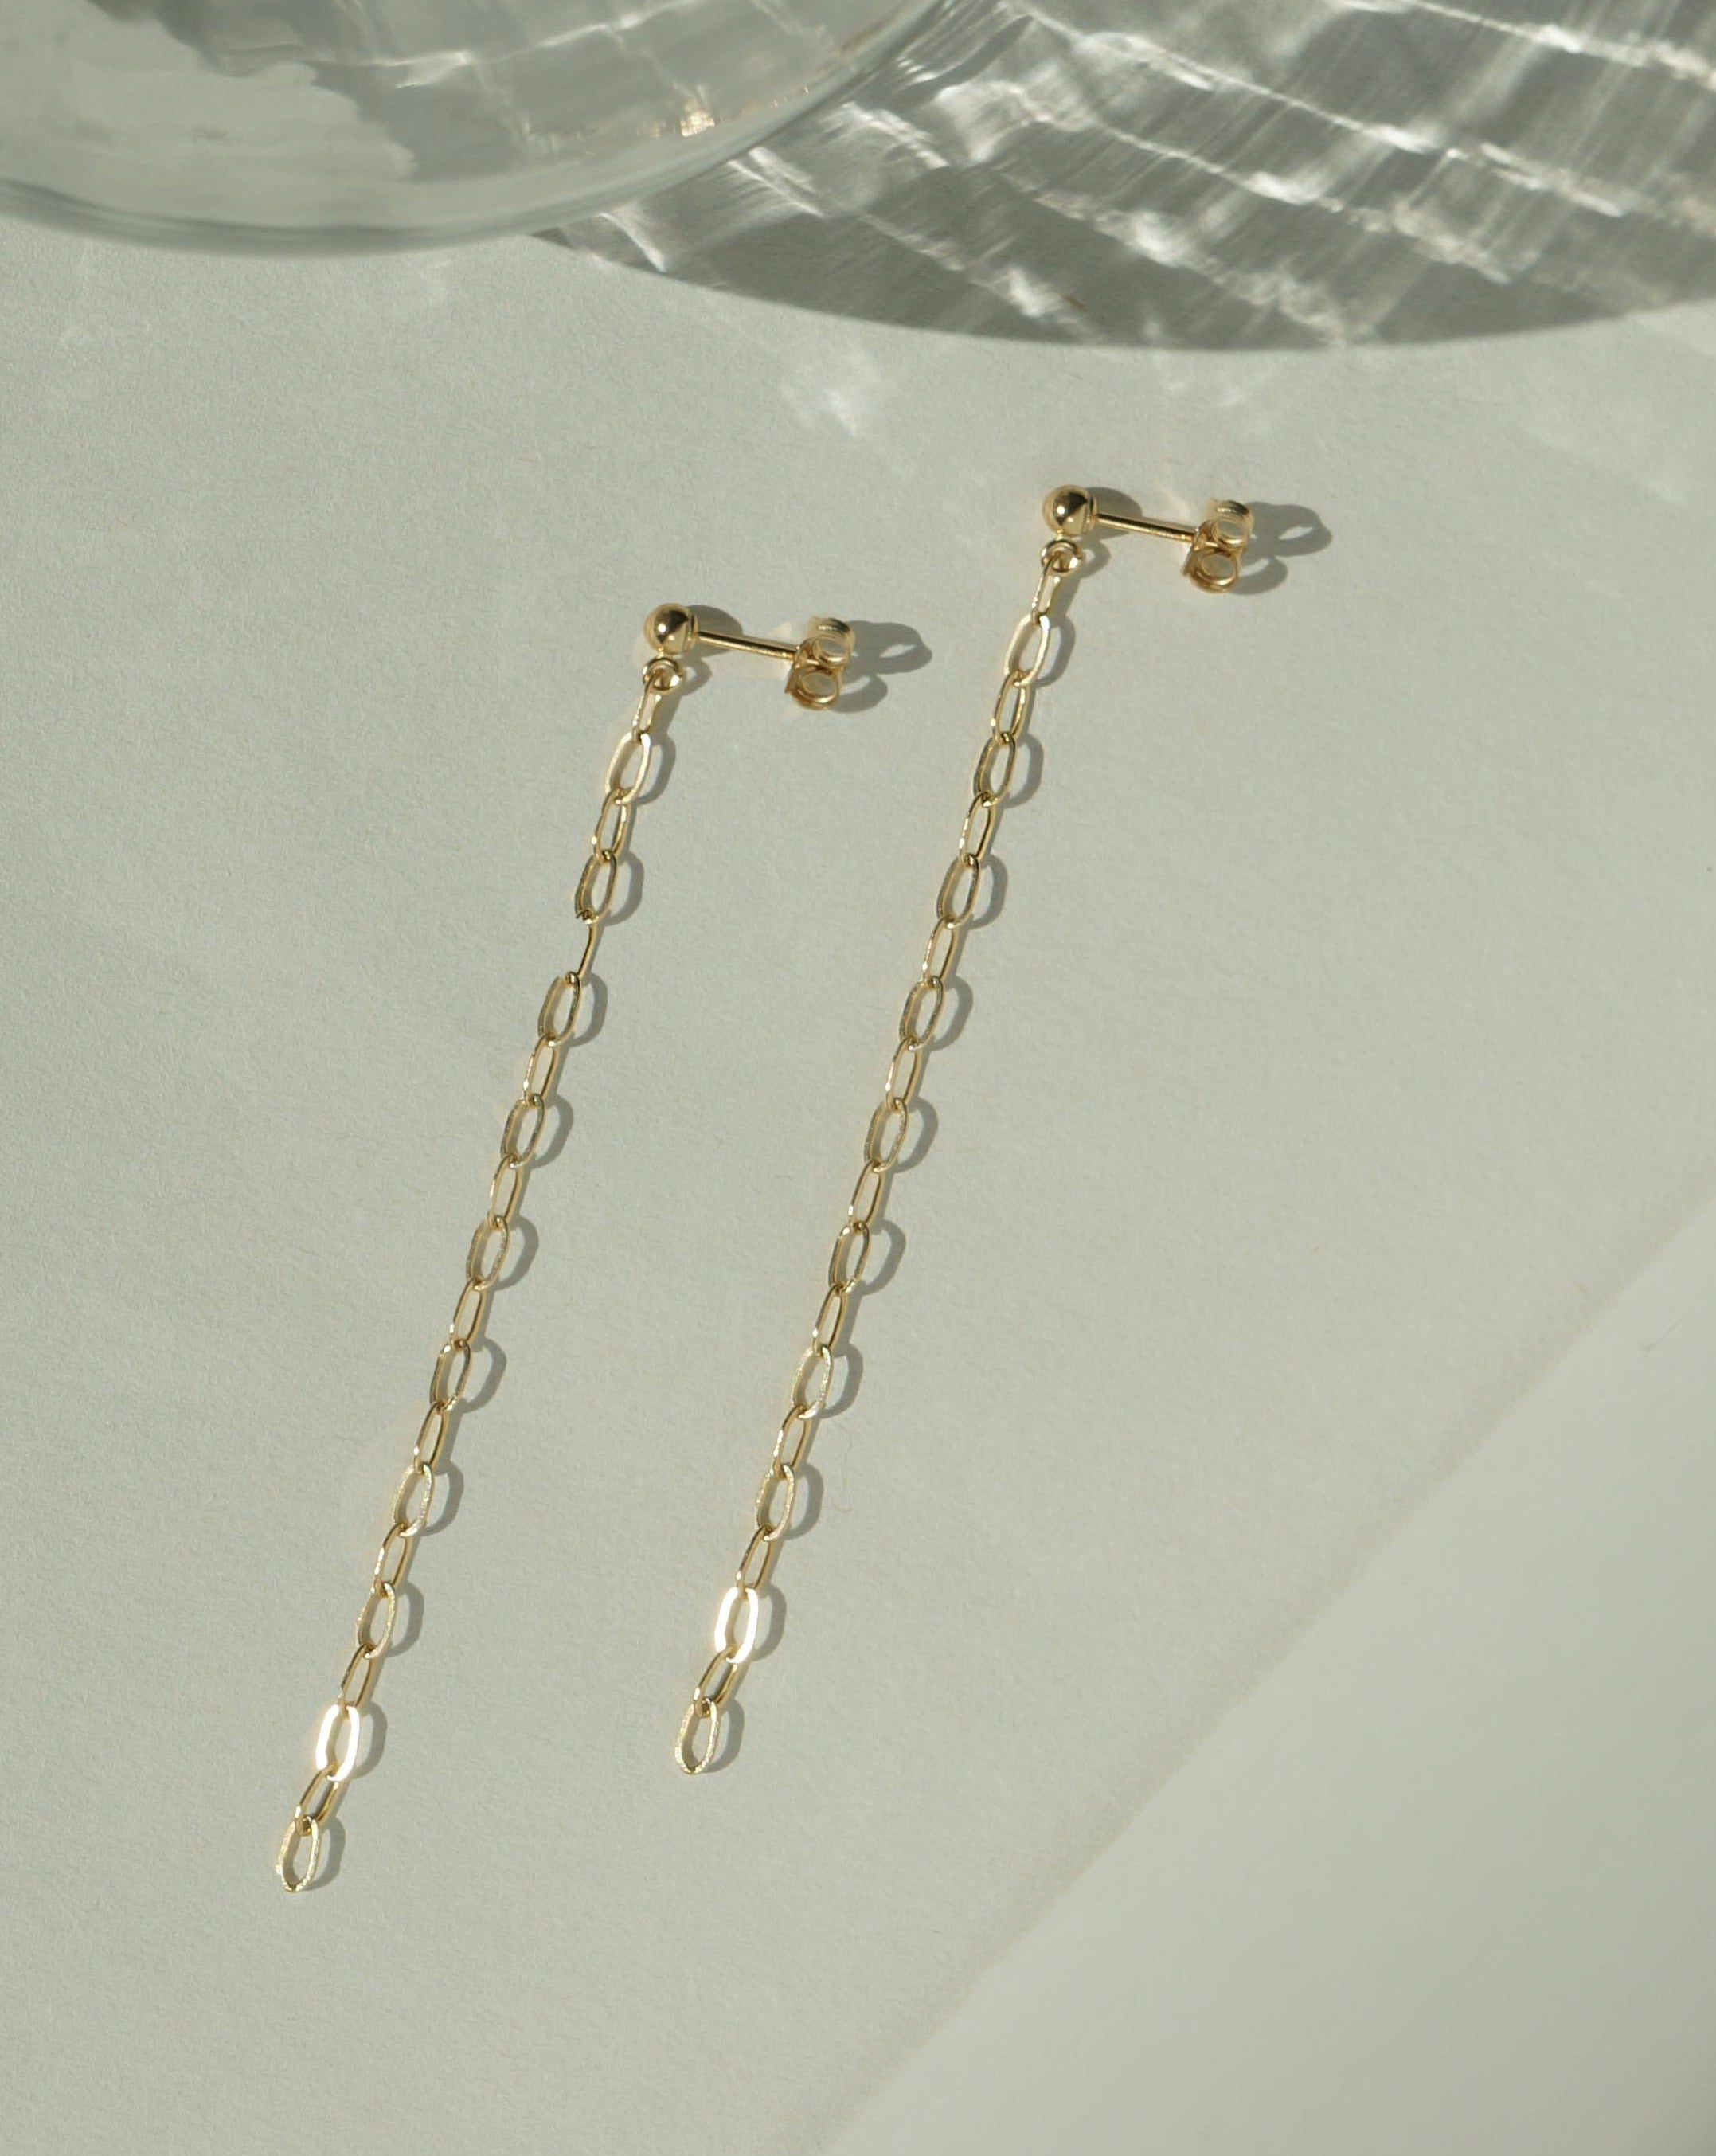 Alicia Chain Earrings by KOZAKH. Chain style drop earrings in 14K Gold Filled. Earring drop is 1.5 inches.